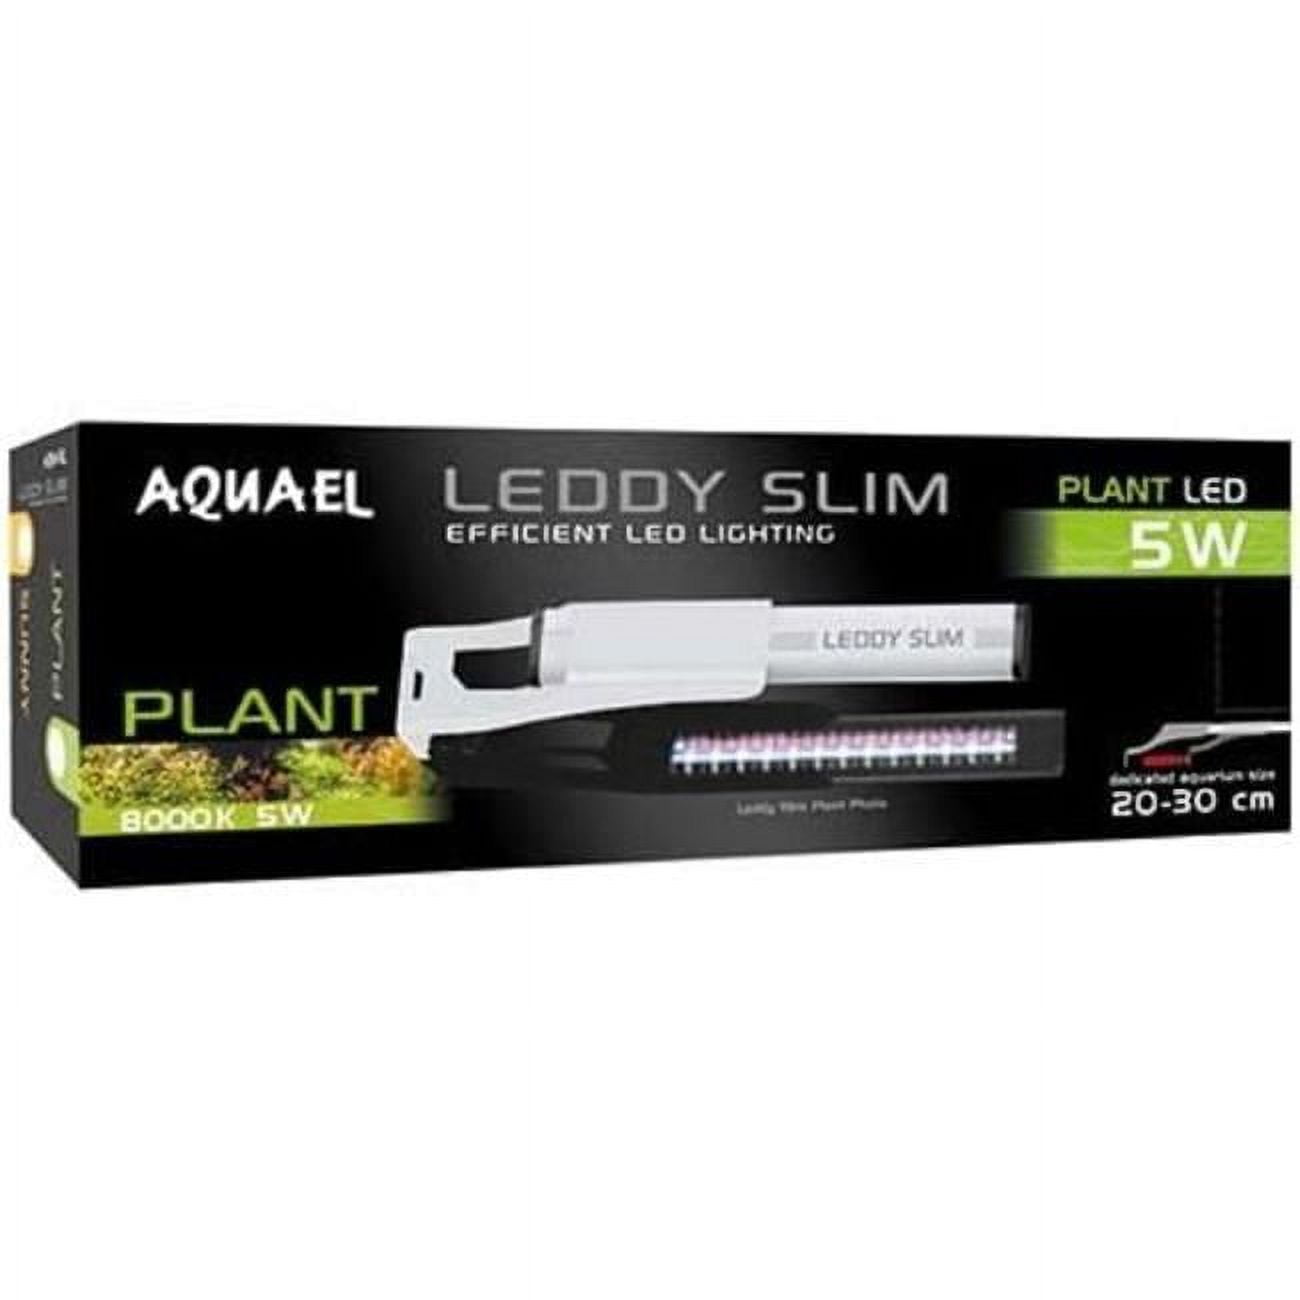 Picture of Aquael 115217 8-11.75 in. 5W Leddy Slim Plant Lamp, White